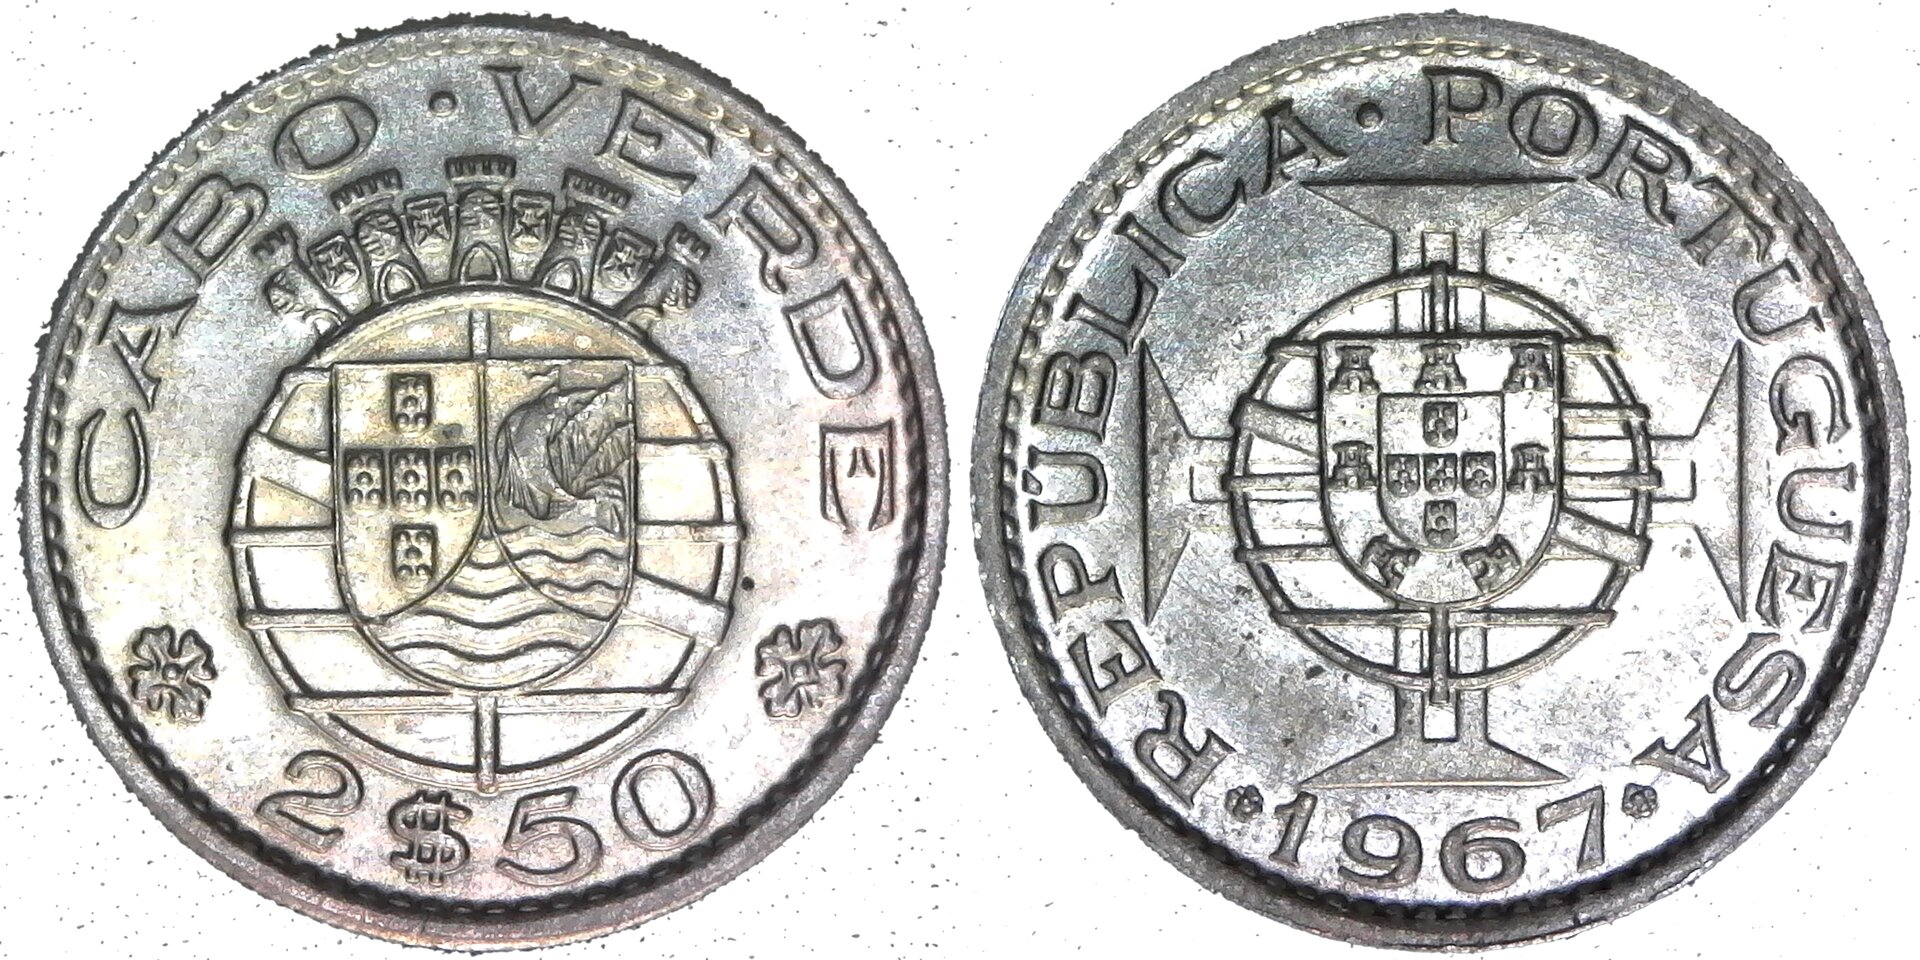 Cape Verde 2.5 Escudos 1967 obv-side-cutout.jpg